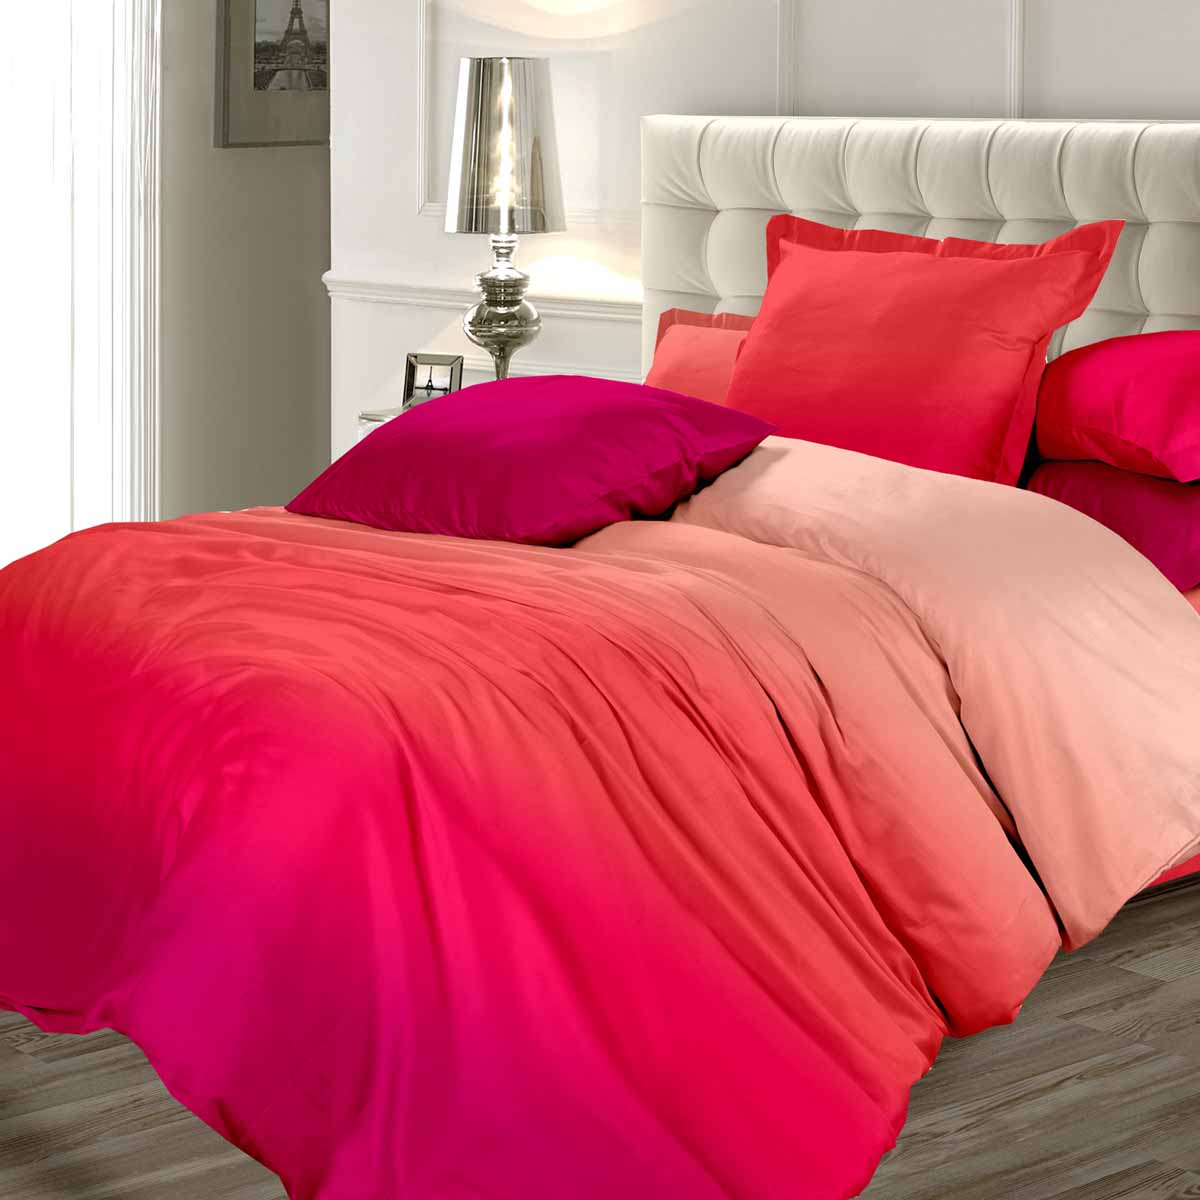 Комплект белья Омбре Luxury "Пурпурный закат", евро, наволочки 70x70